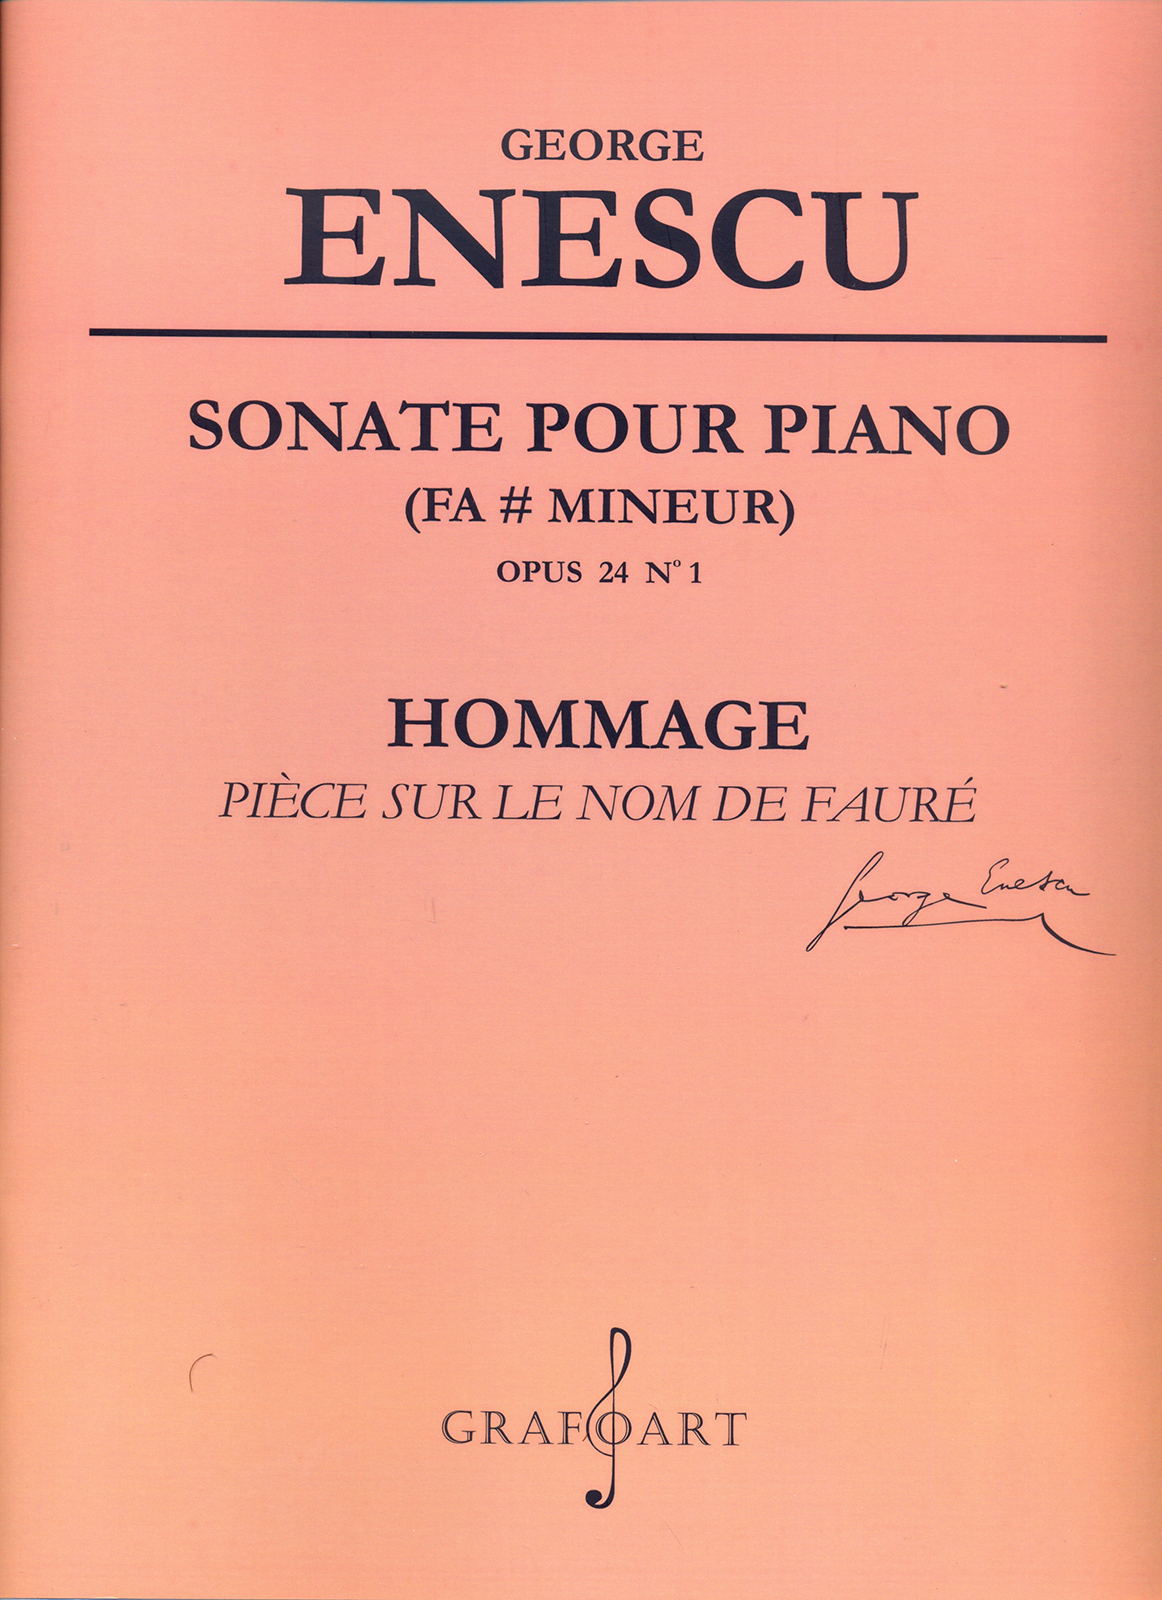 George Enescu – Sonate Pour Piano Opus 24 Nr.1 | George Enescu carturesti.ro poza bestsellers.ro